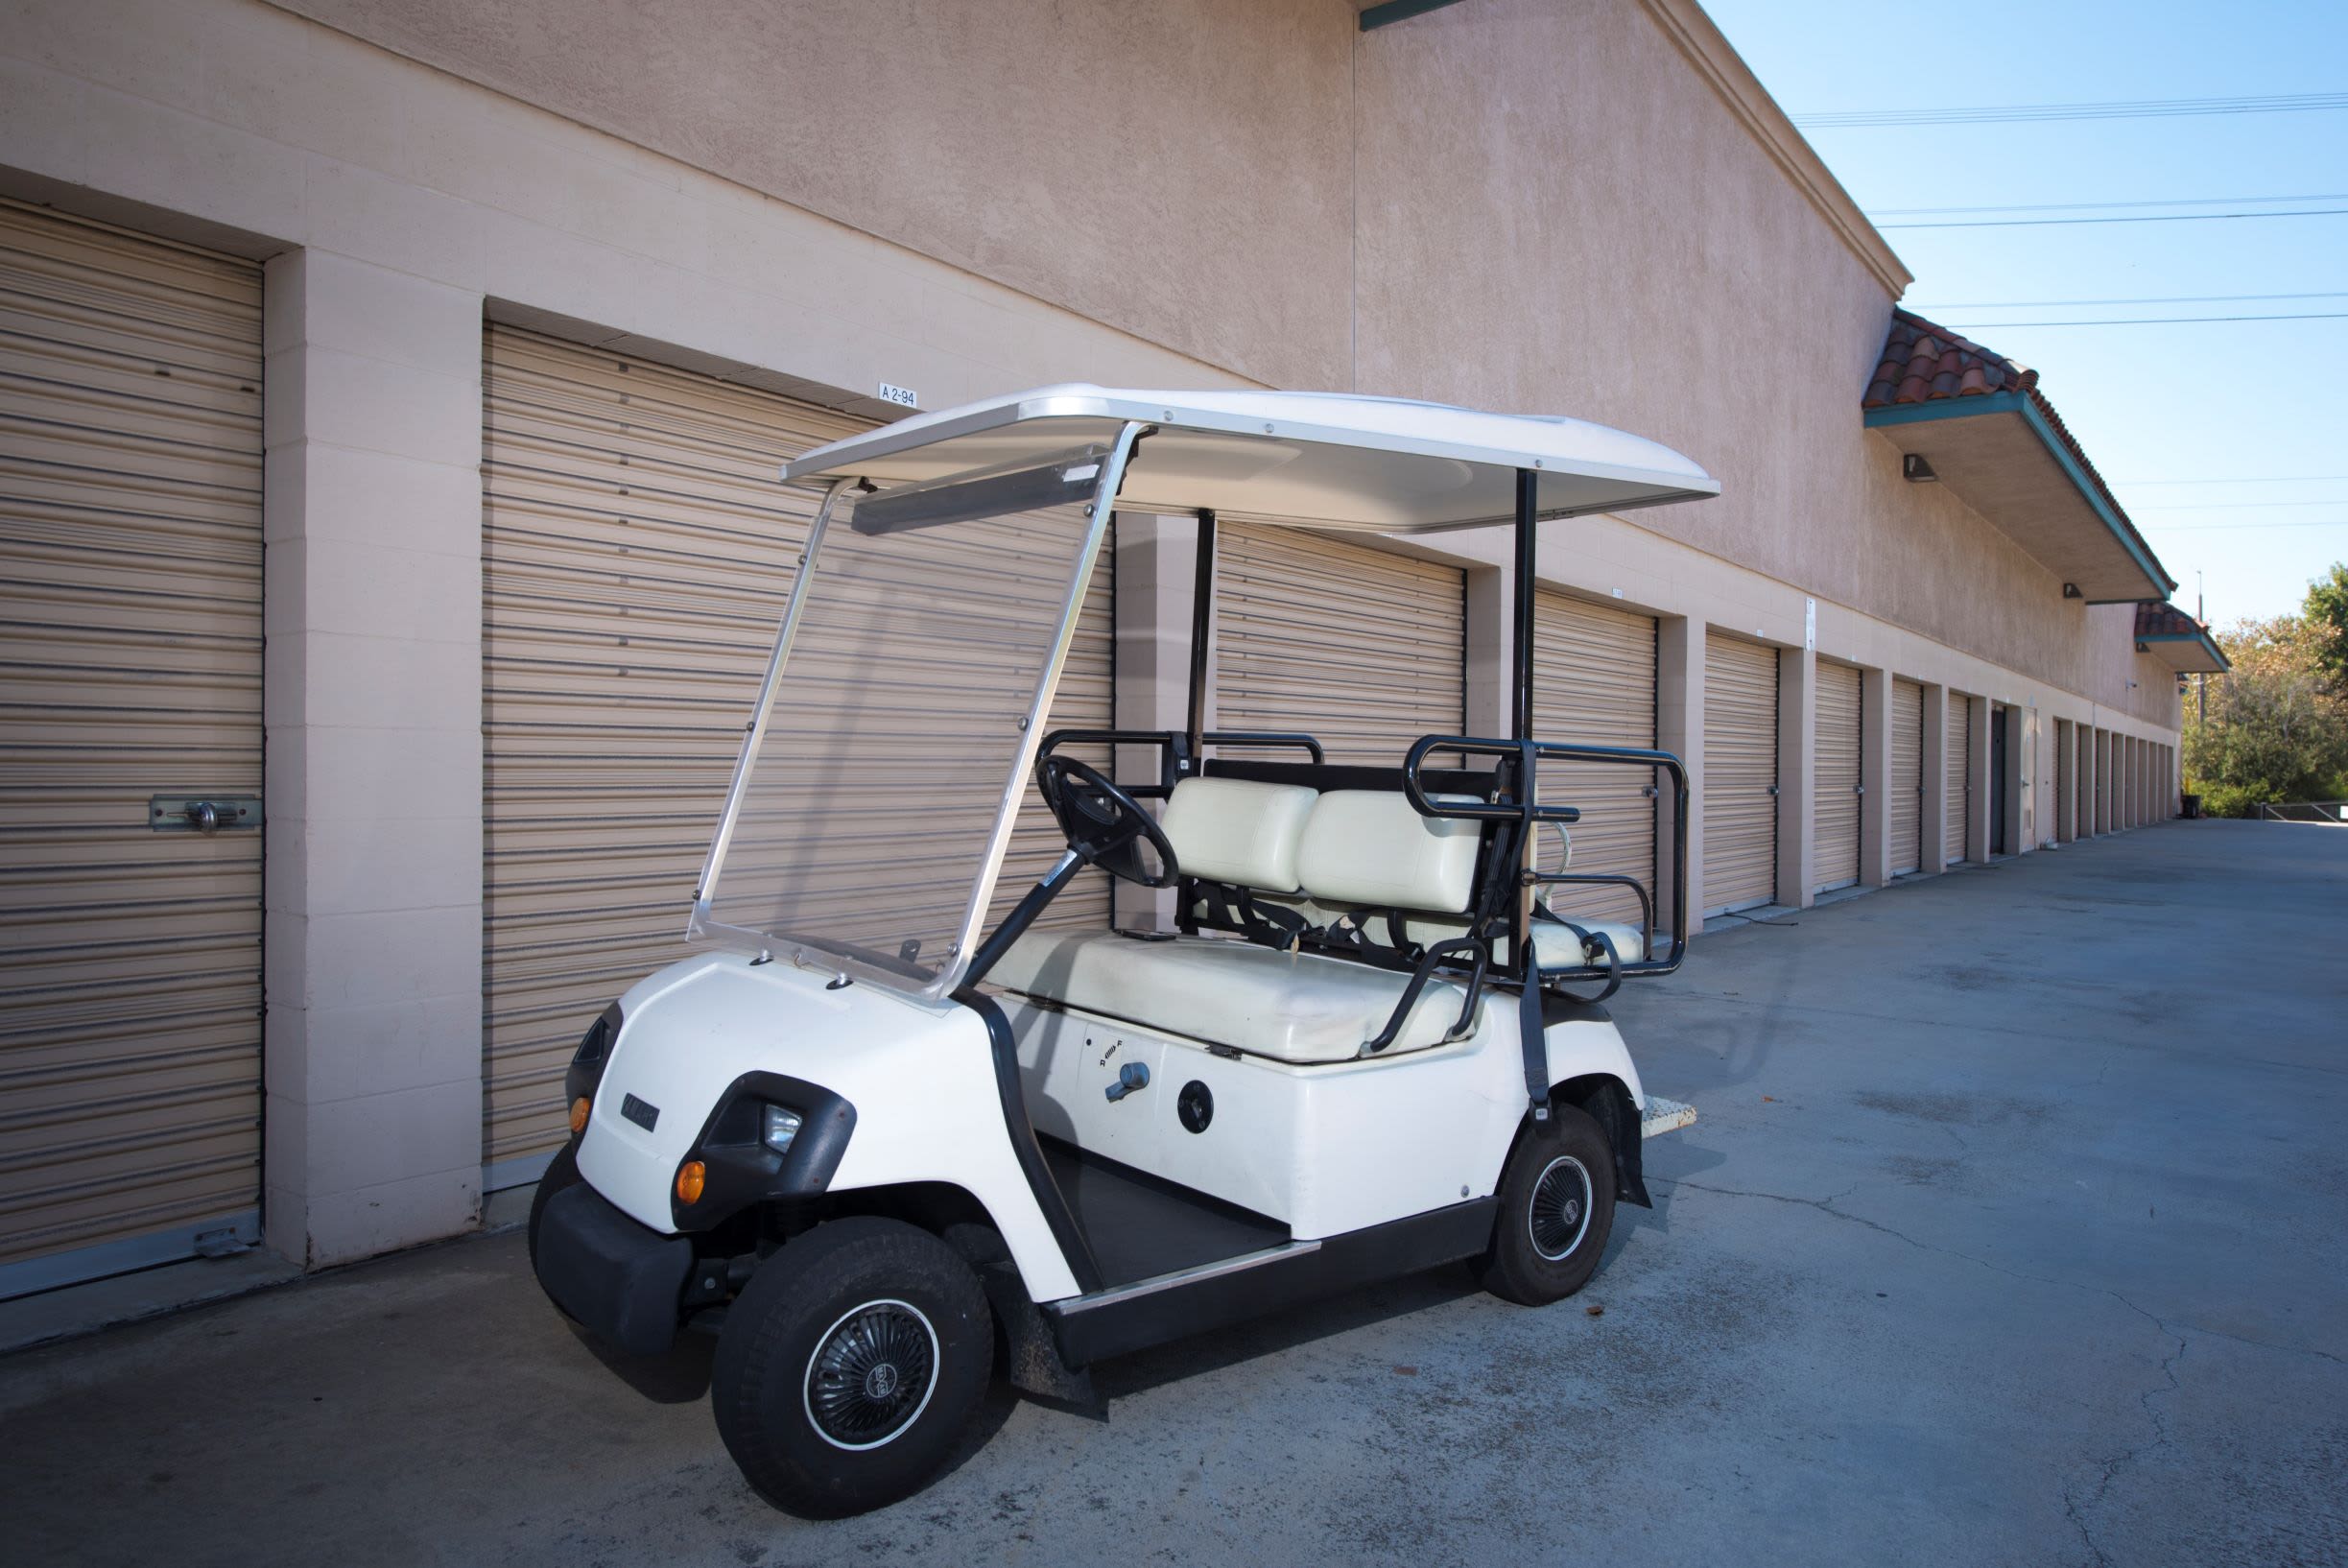 A golf cart at Olivenhain Self Storage in Encinitas, CA